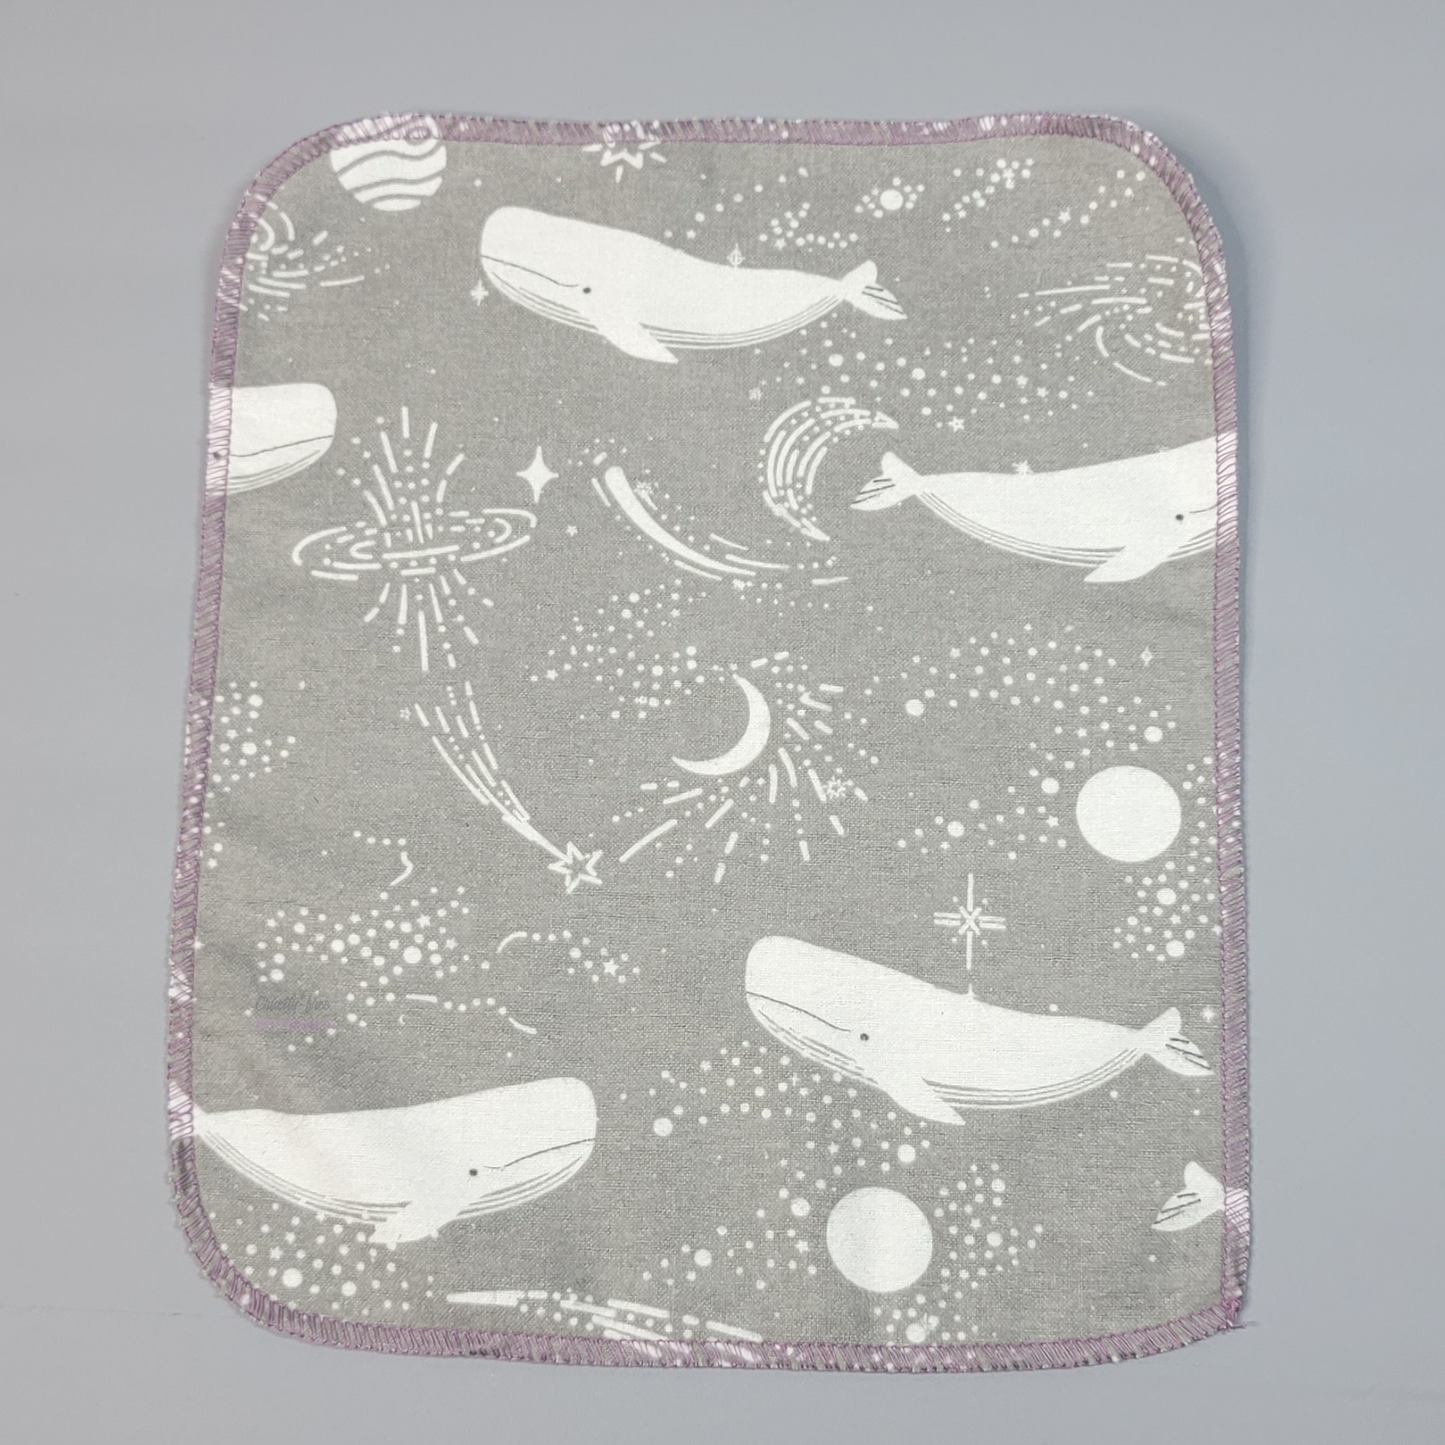 Whales NonPaper Towels